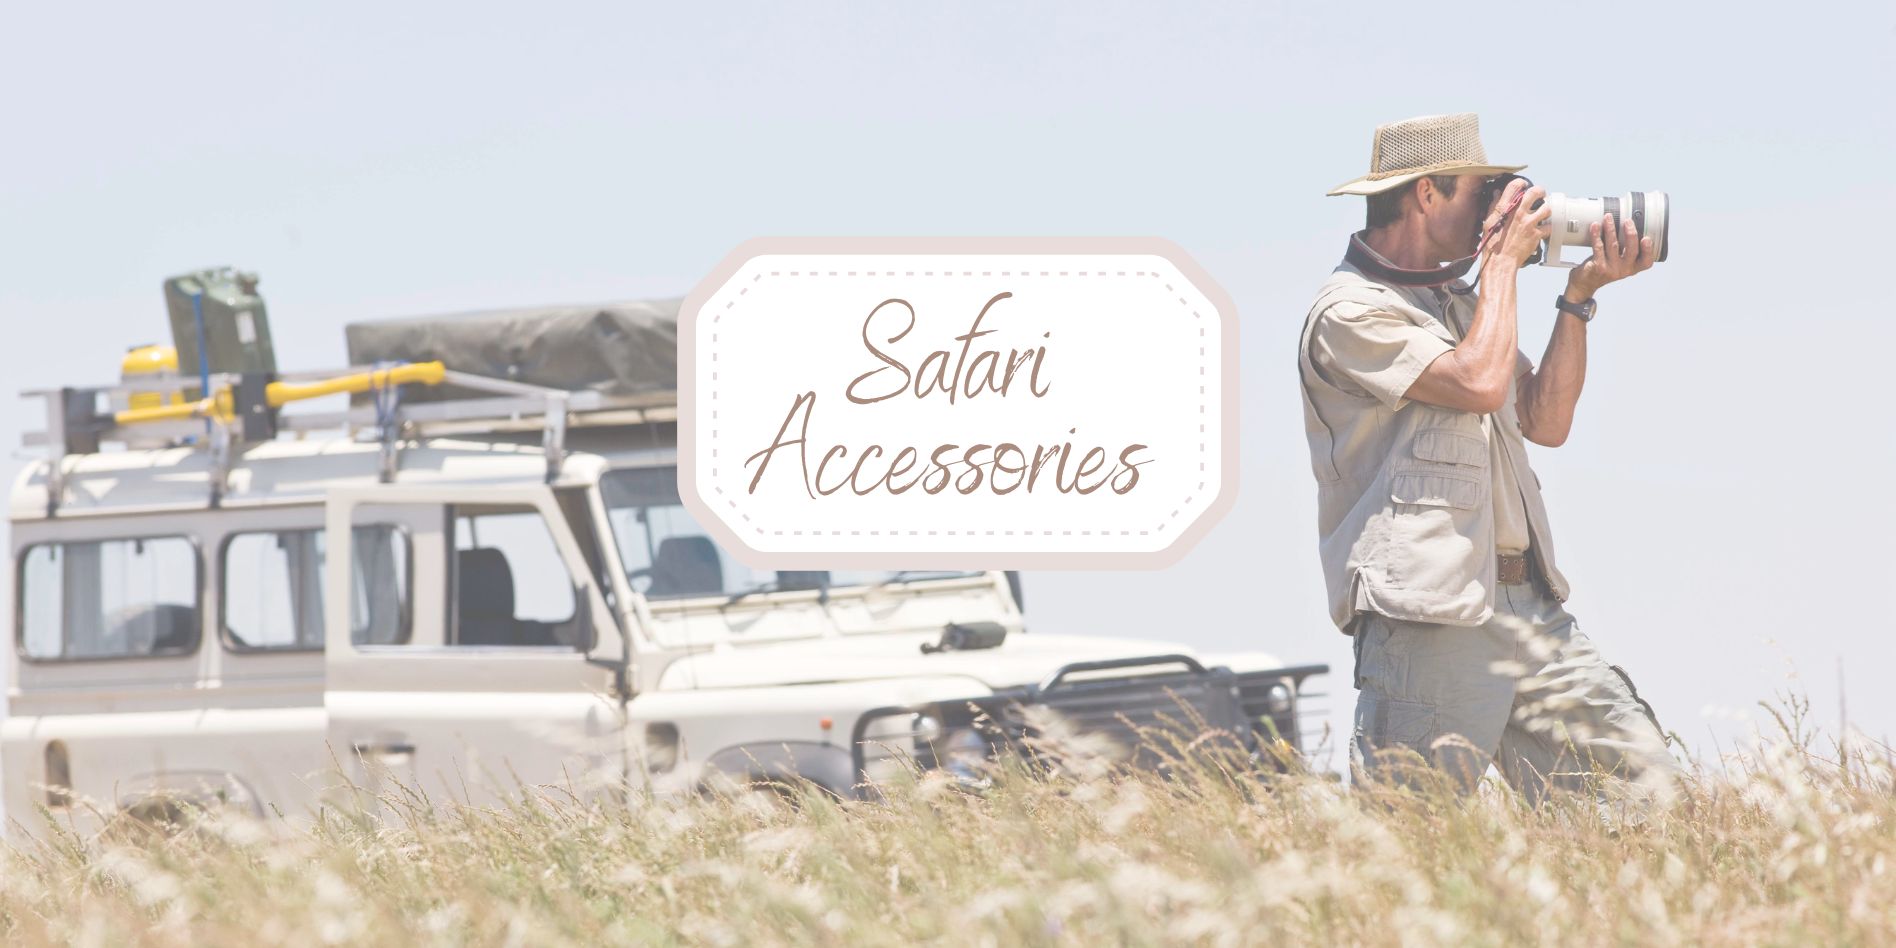 Safari Accessories Header